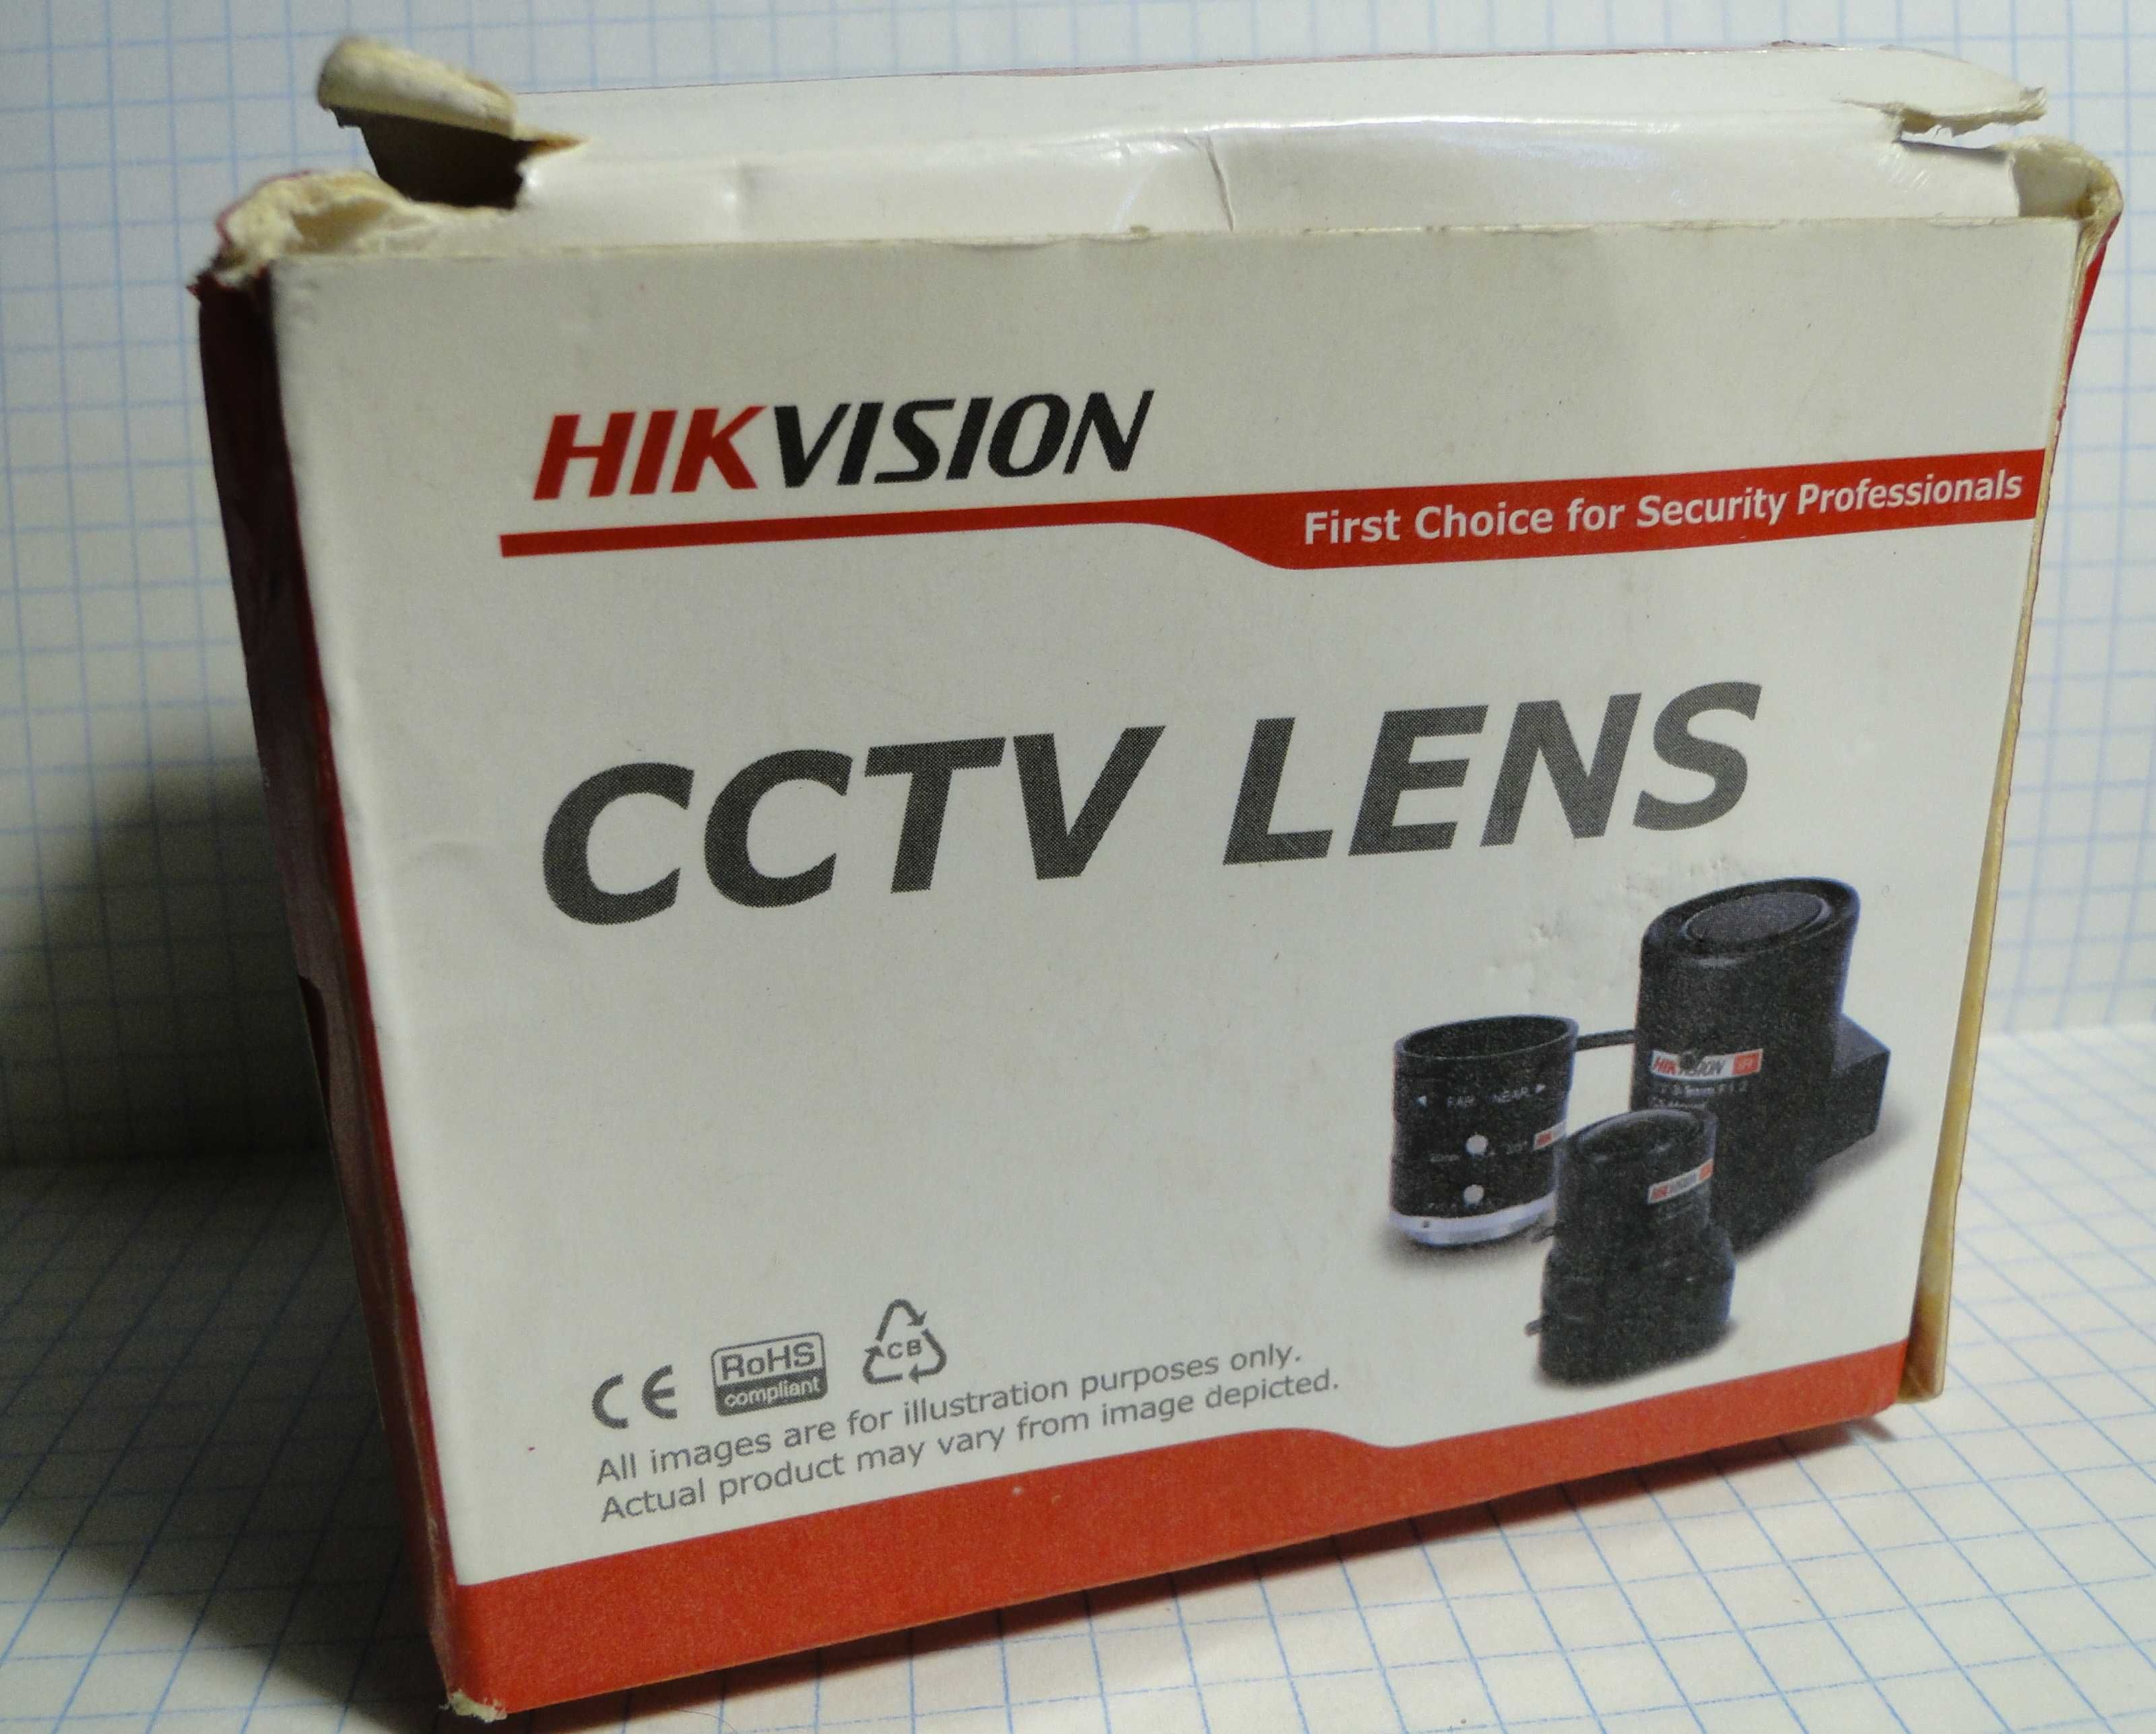 Объектив Hikvision HV4510D-MPIR